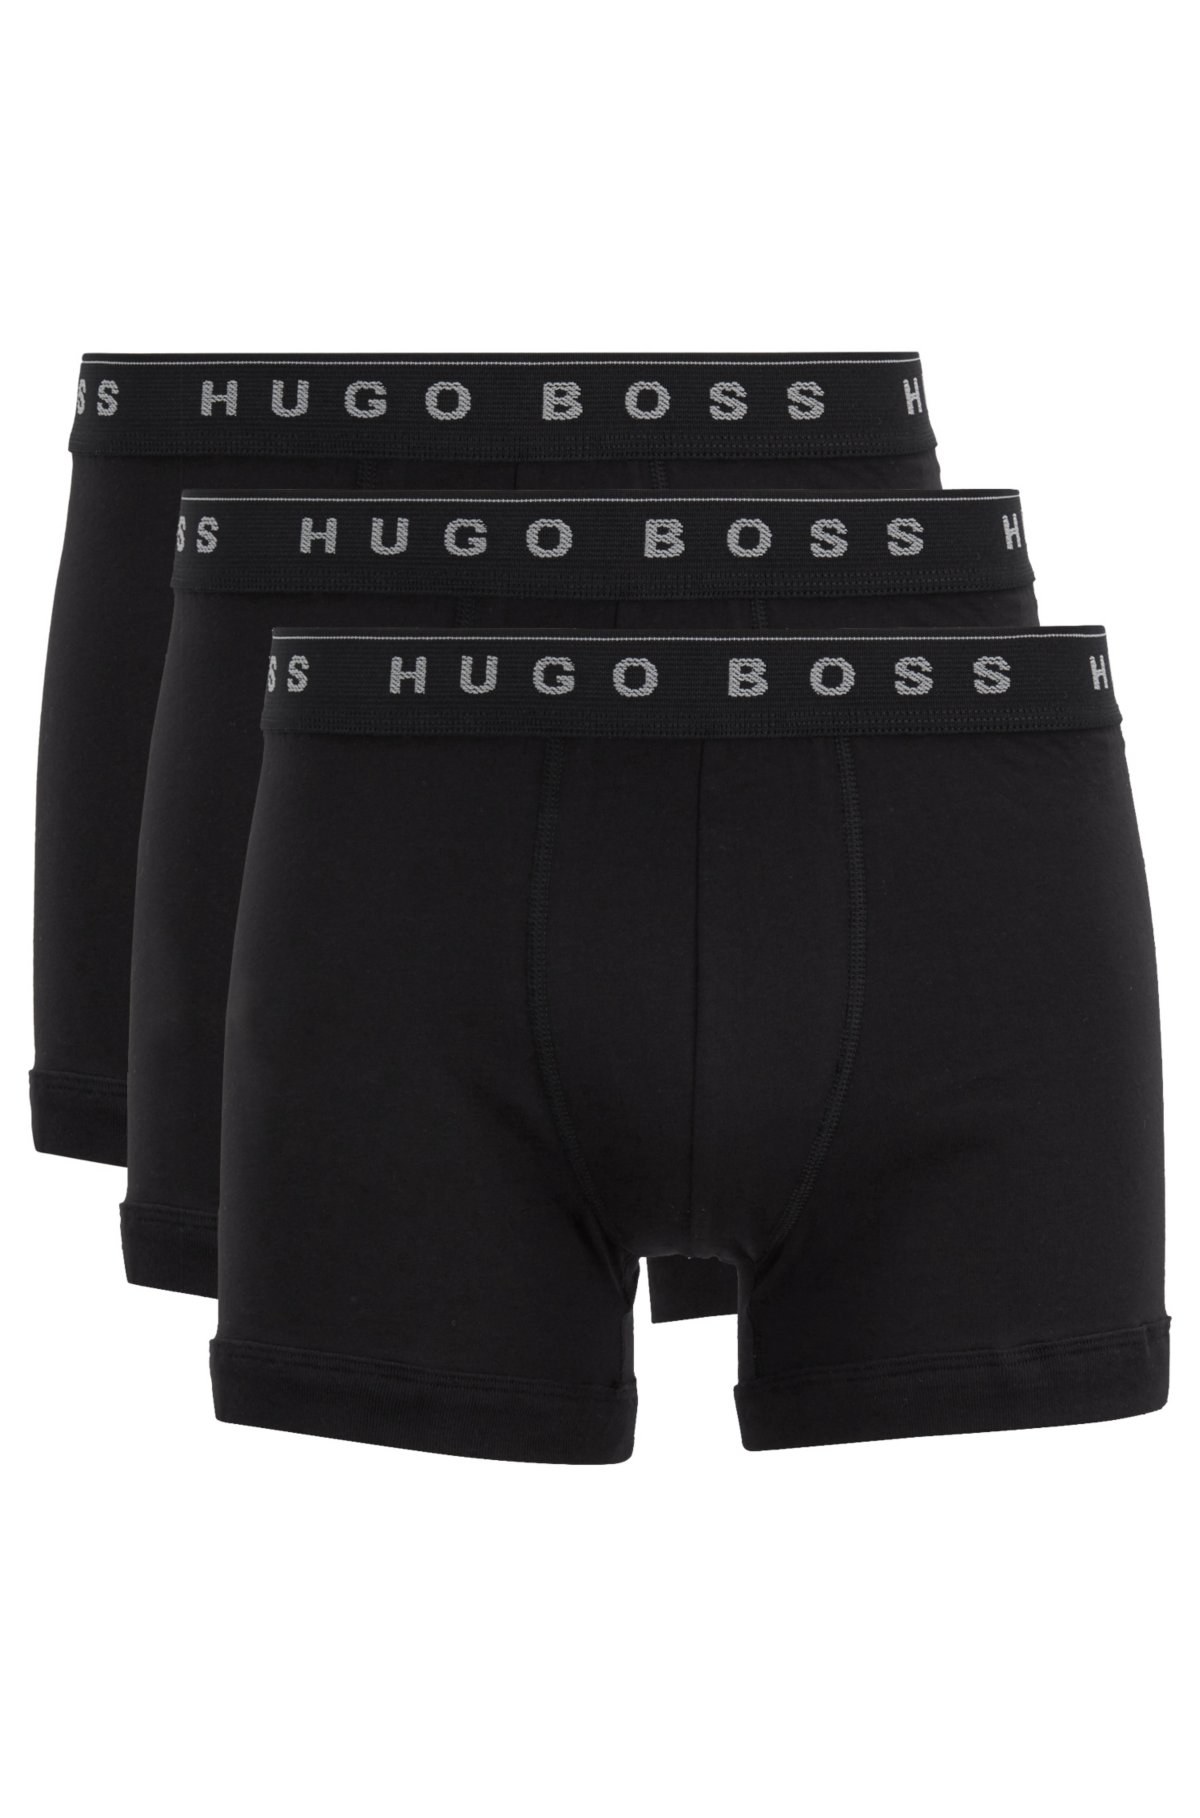 Hugo Boss Pure Cotton Boxer 3 Pack Charcoal/Black/Grey 50236732-061 at  International Jock